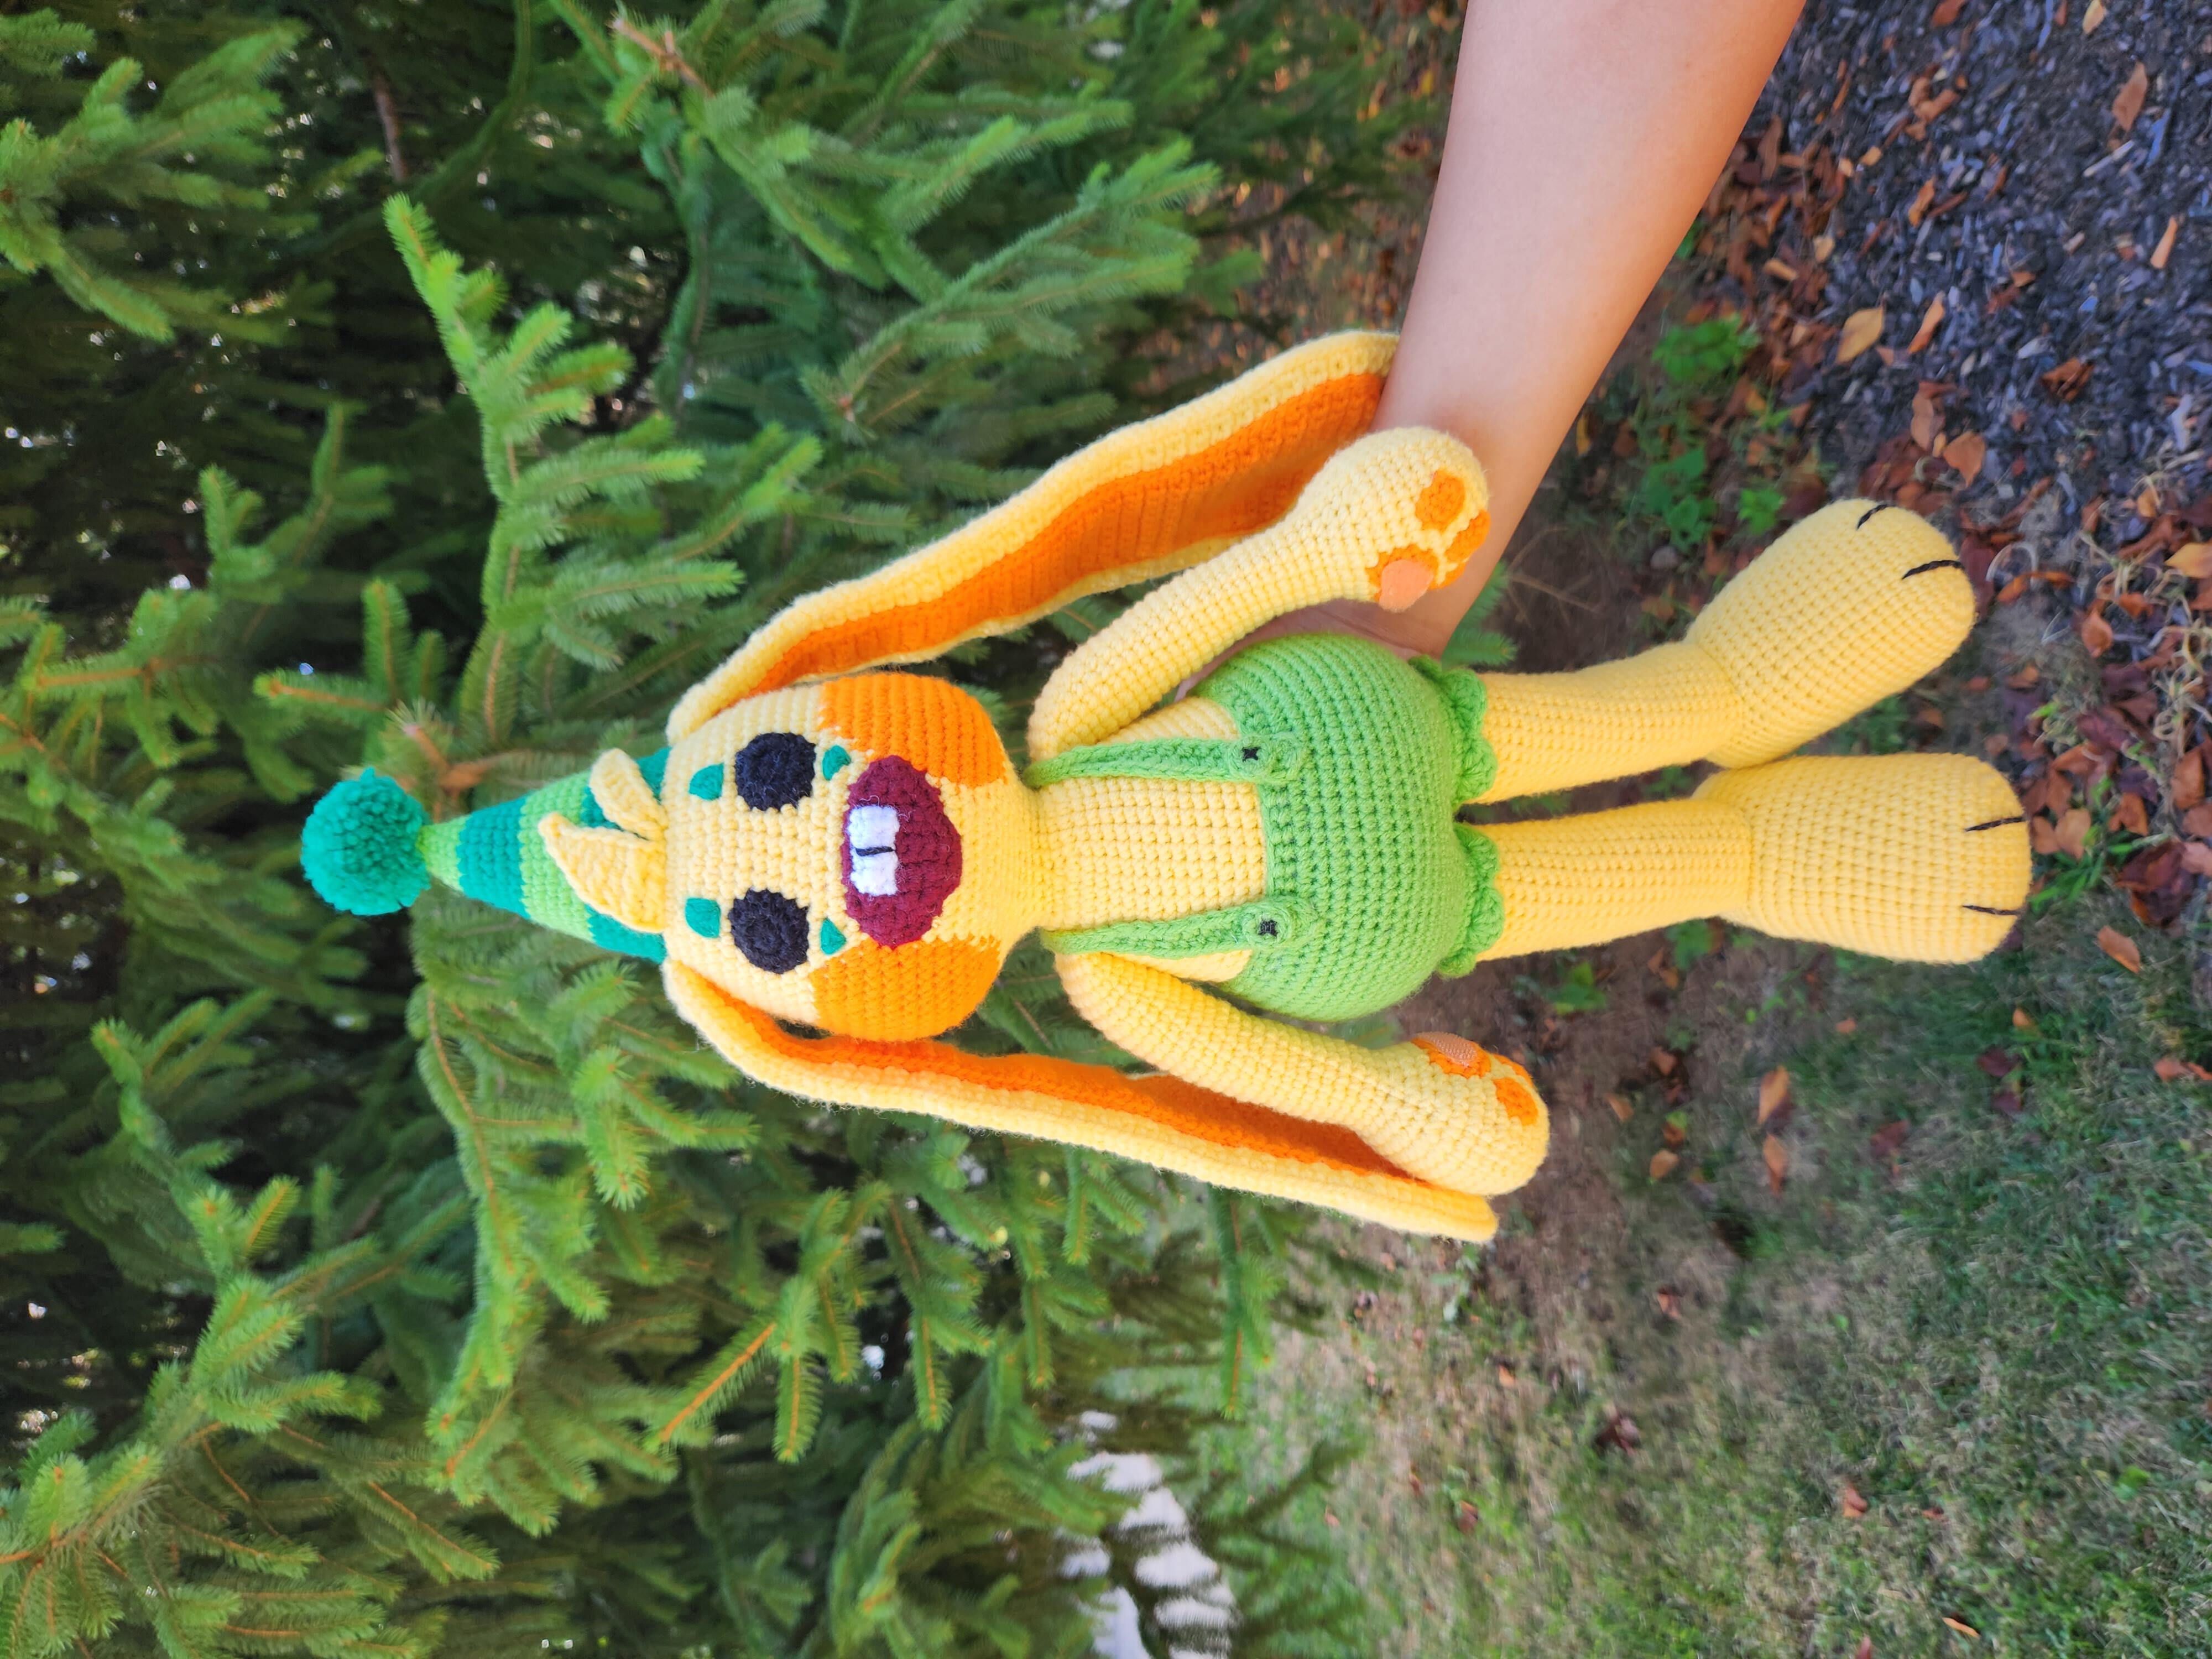 Bunzo Bunny Plush Toy -13.7 inches (Bunzo Bunny Plush) : : Toys &  Games